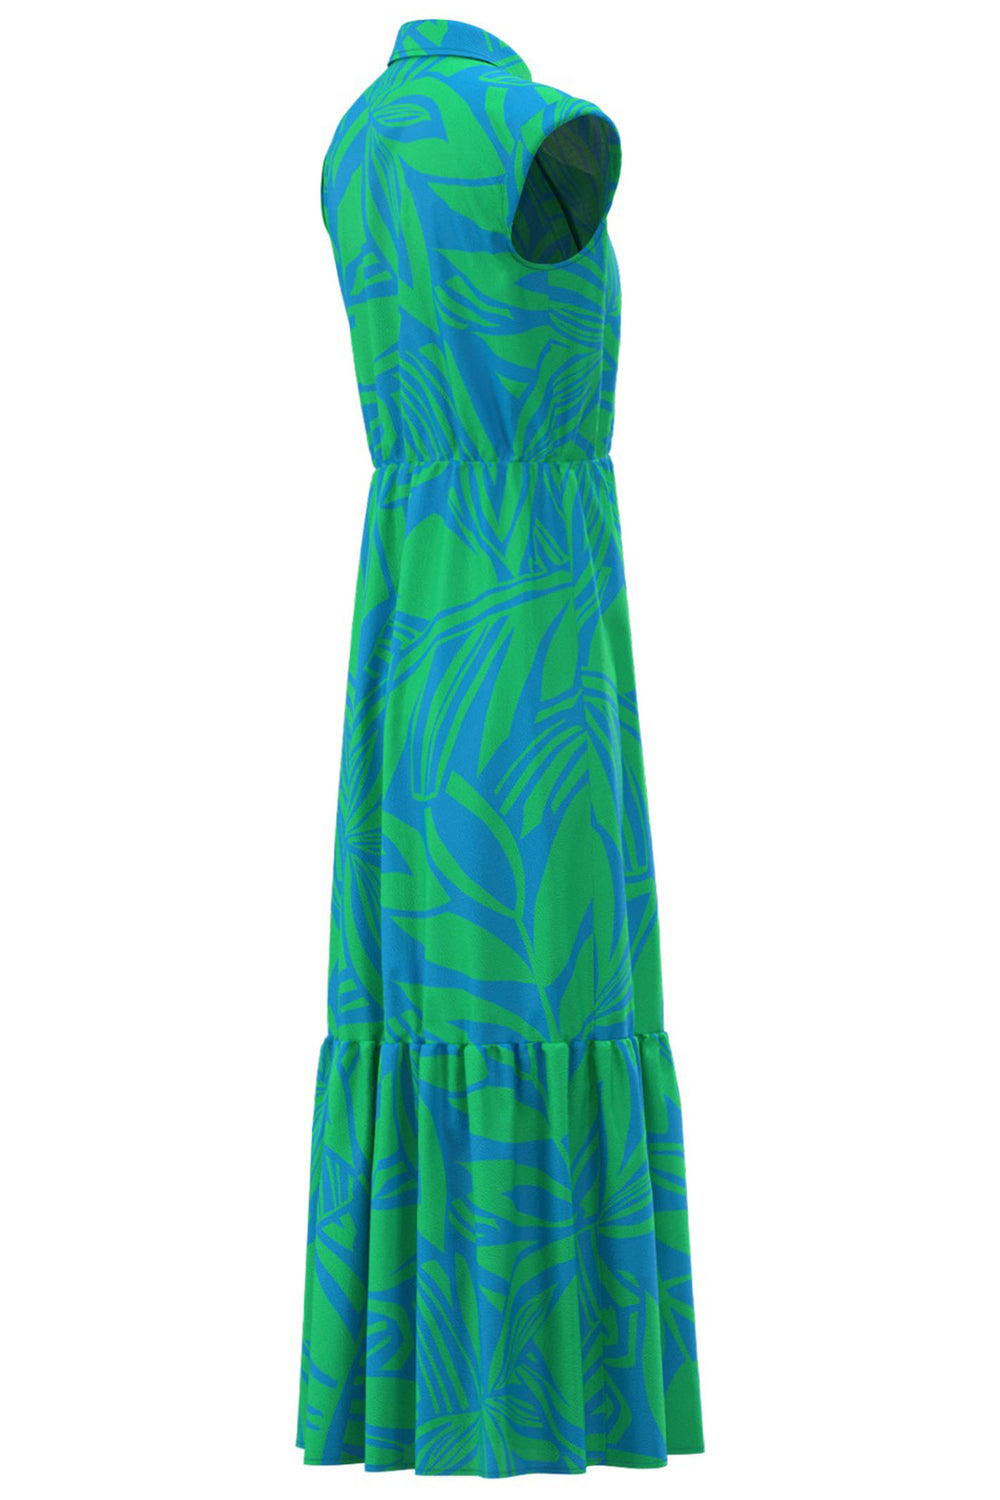 Emme Timbro 2415221352200 Turquoise Print Cap Sleeve Shirt Dress - Olivia Grace Fashion